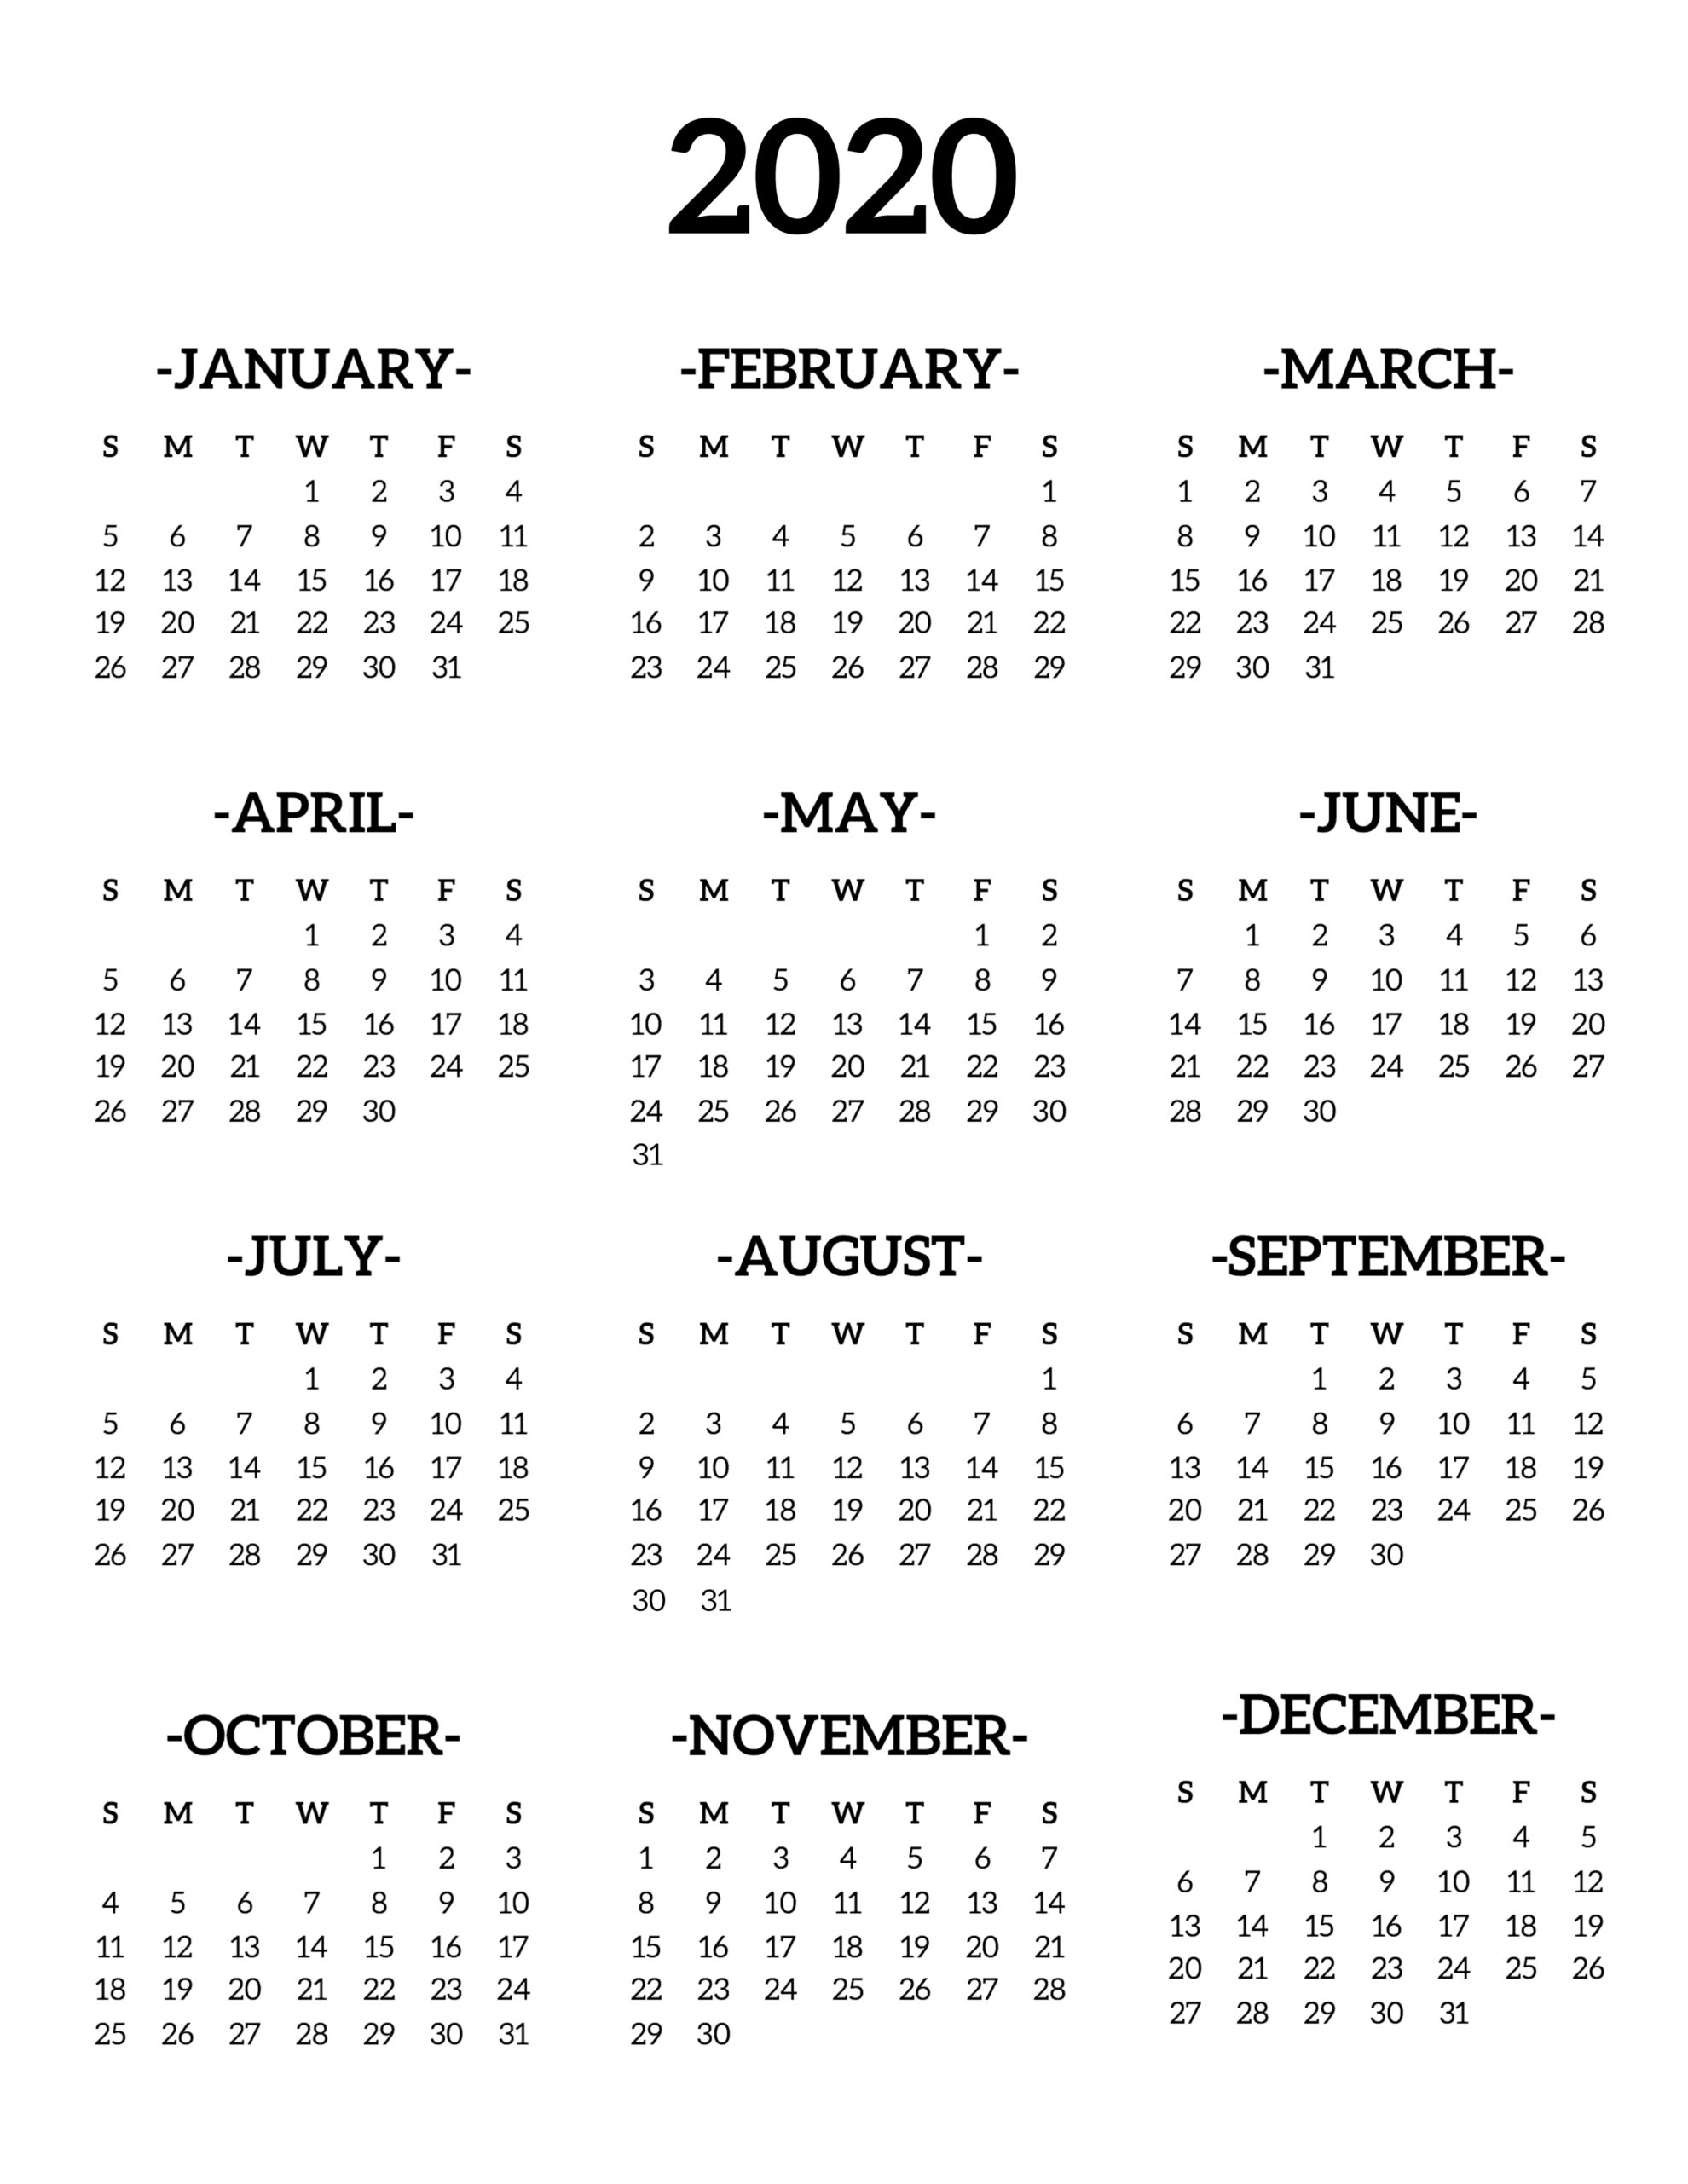 Calendar 2020 Printable One Page - Paper Trail Design regarding Calendar At A Glance Printable 2020